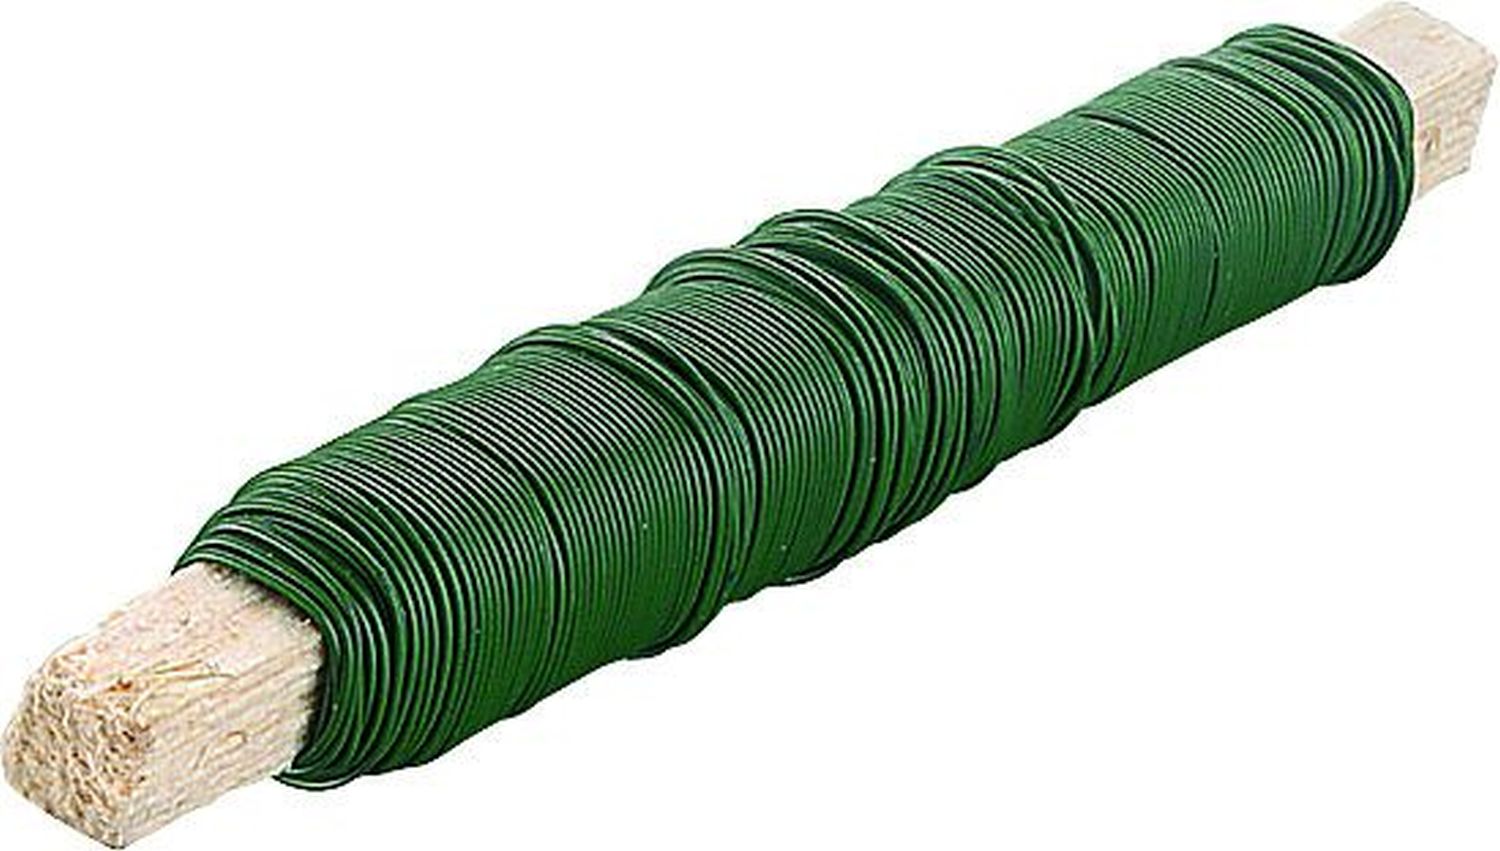 Blumendraht - Ø 0,65 mm, 100 g, moosgrün